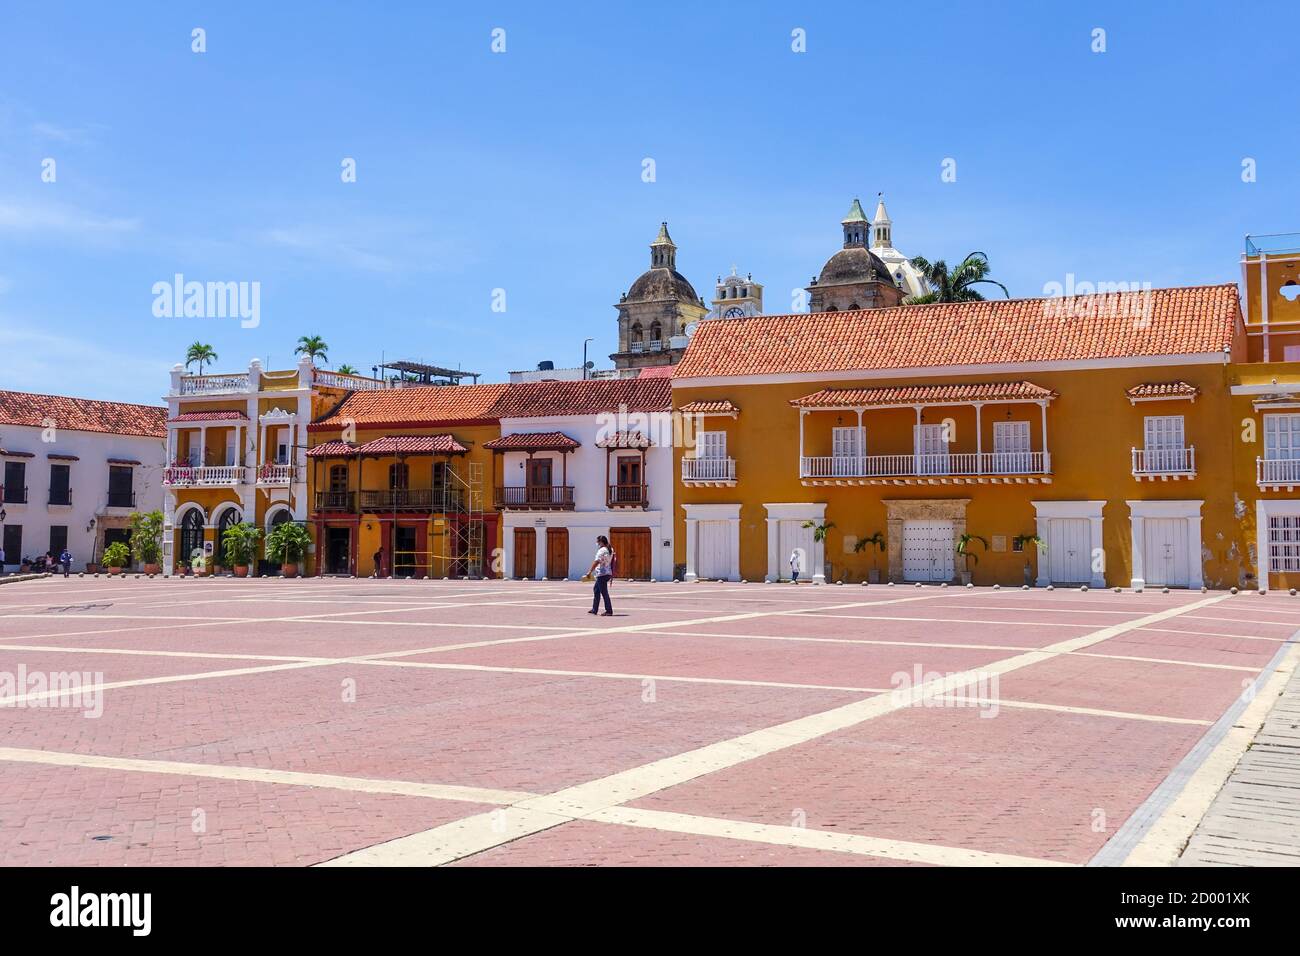 Plaza De La Aduana empty during the Covid-19 pandemic lockdown of Cartagena, Colombia. Stock Photo